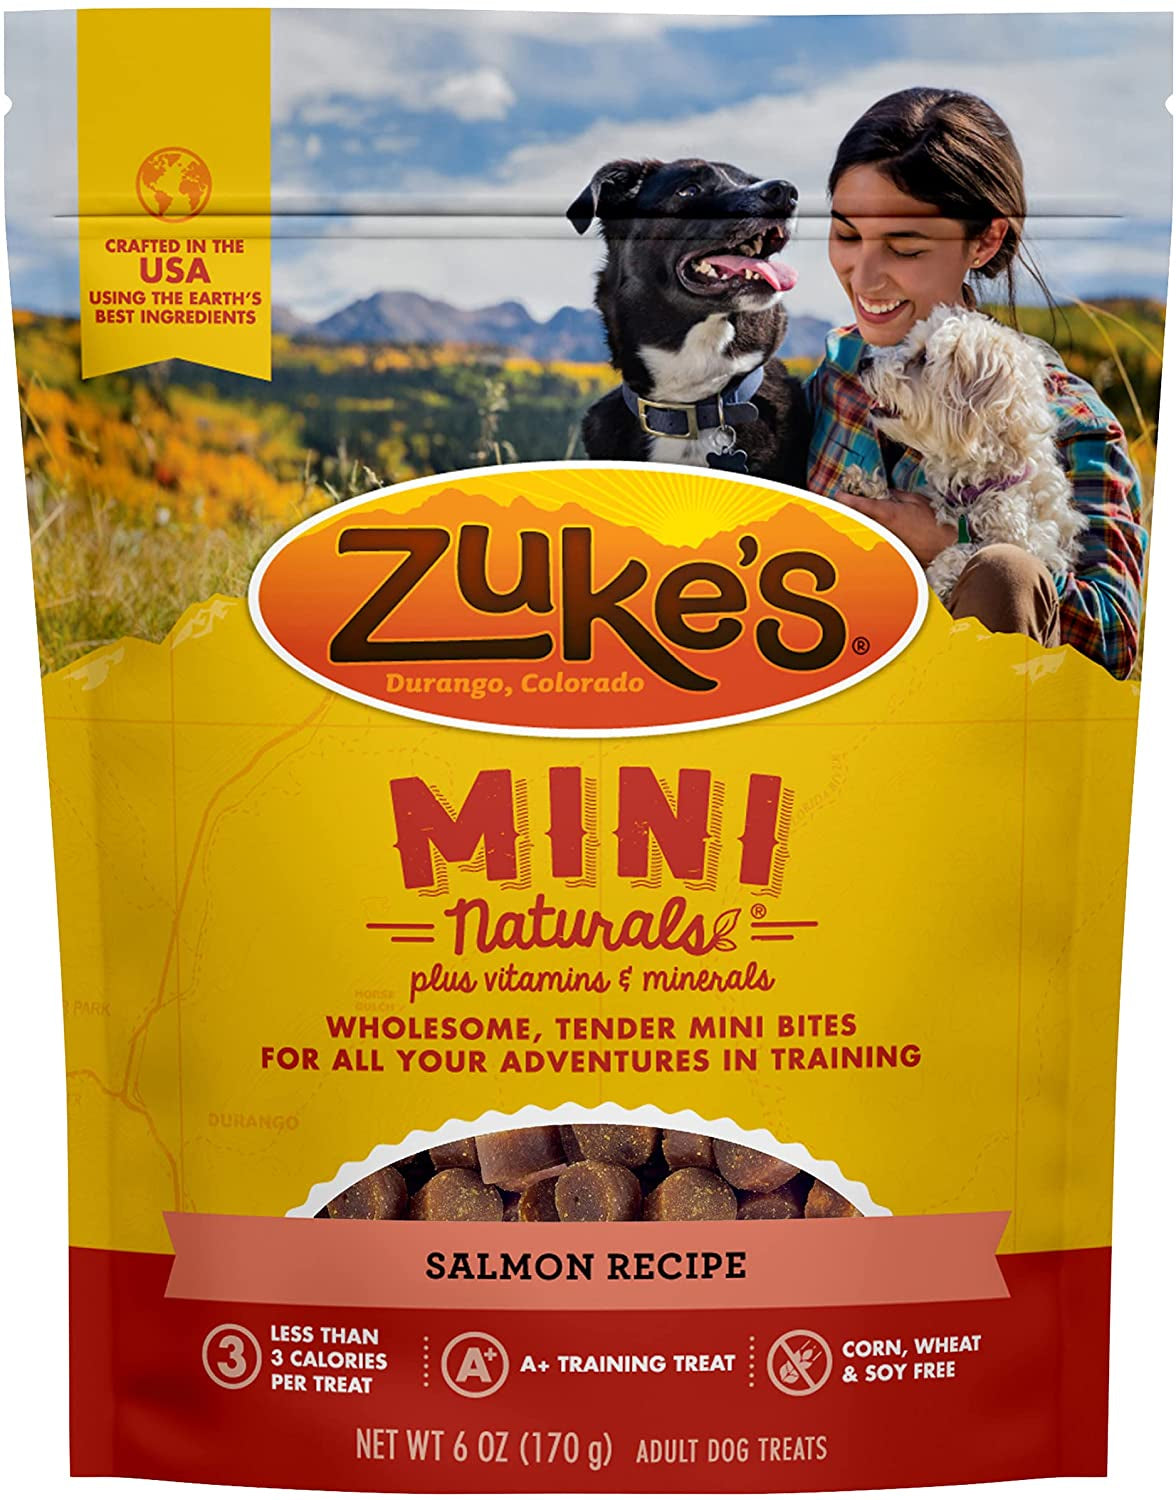 Zukes Mini Naturals Dog Treats Salmon Recipe - PetMountain.com